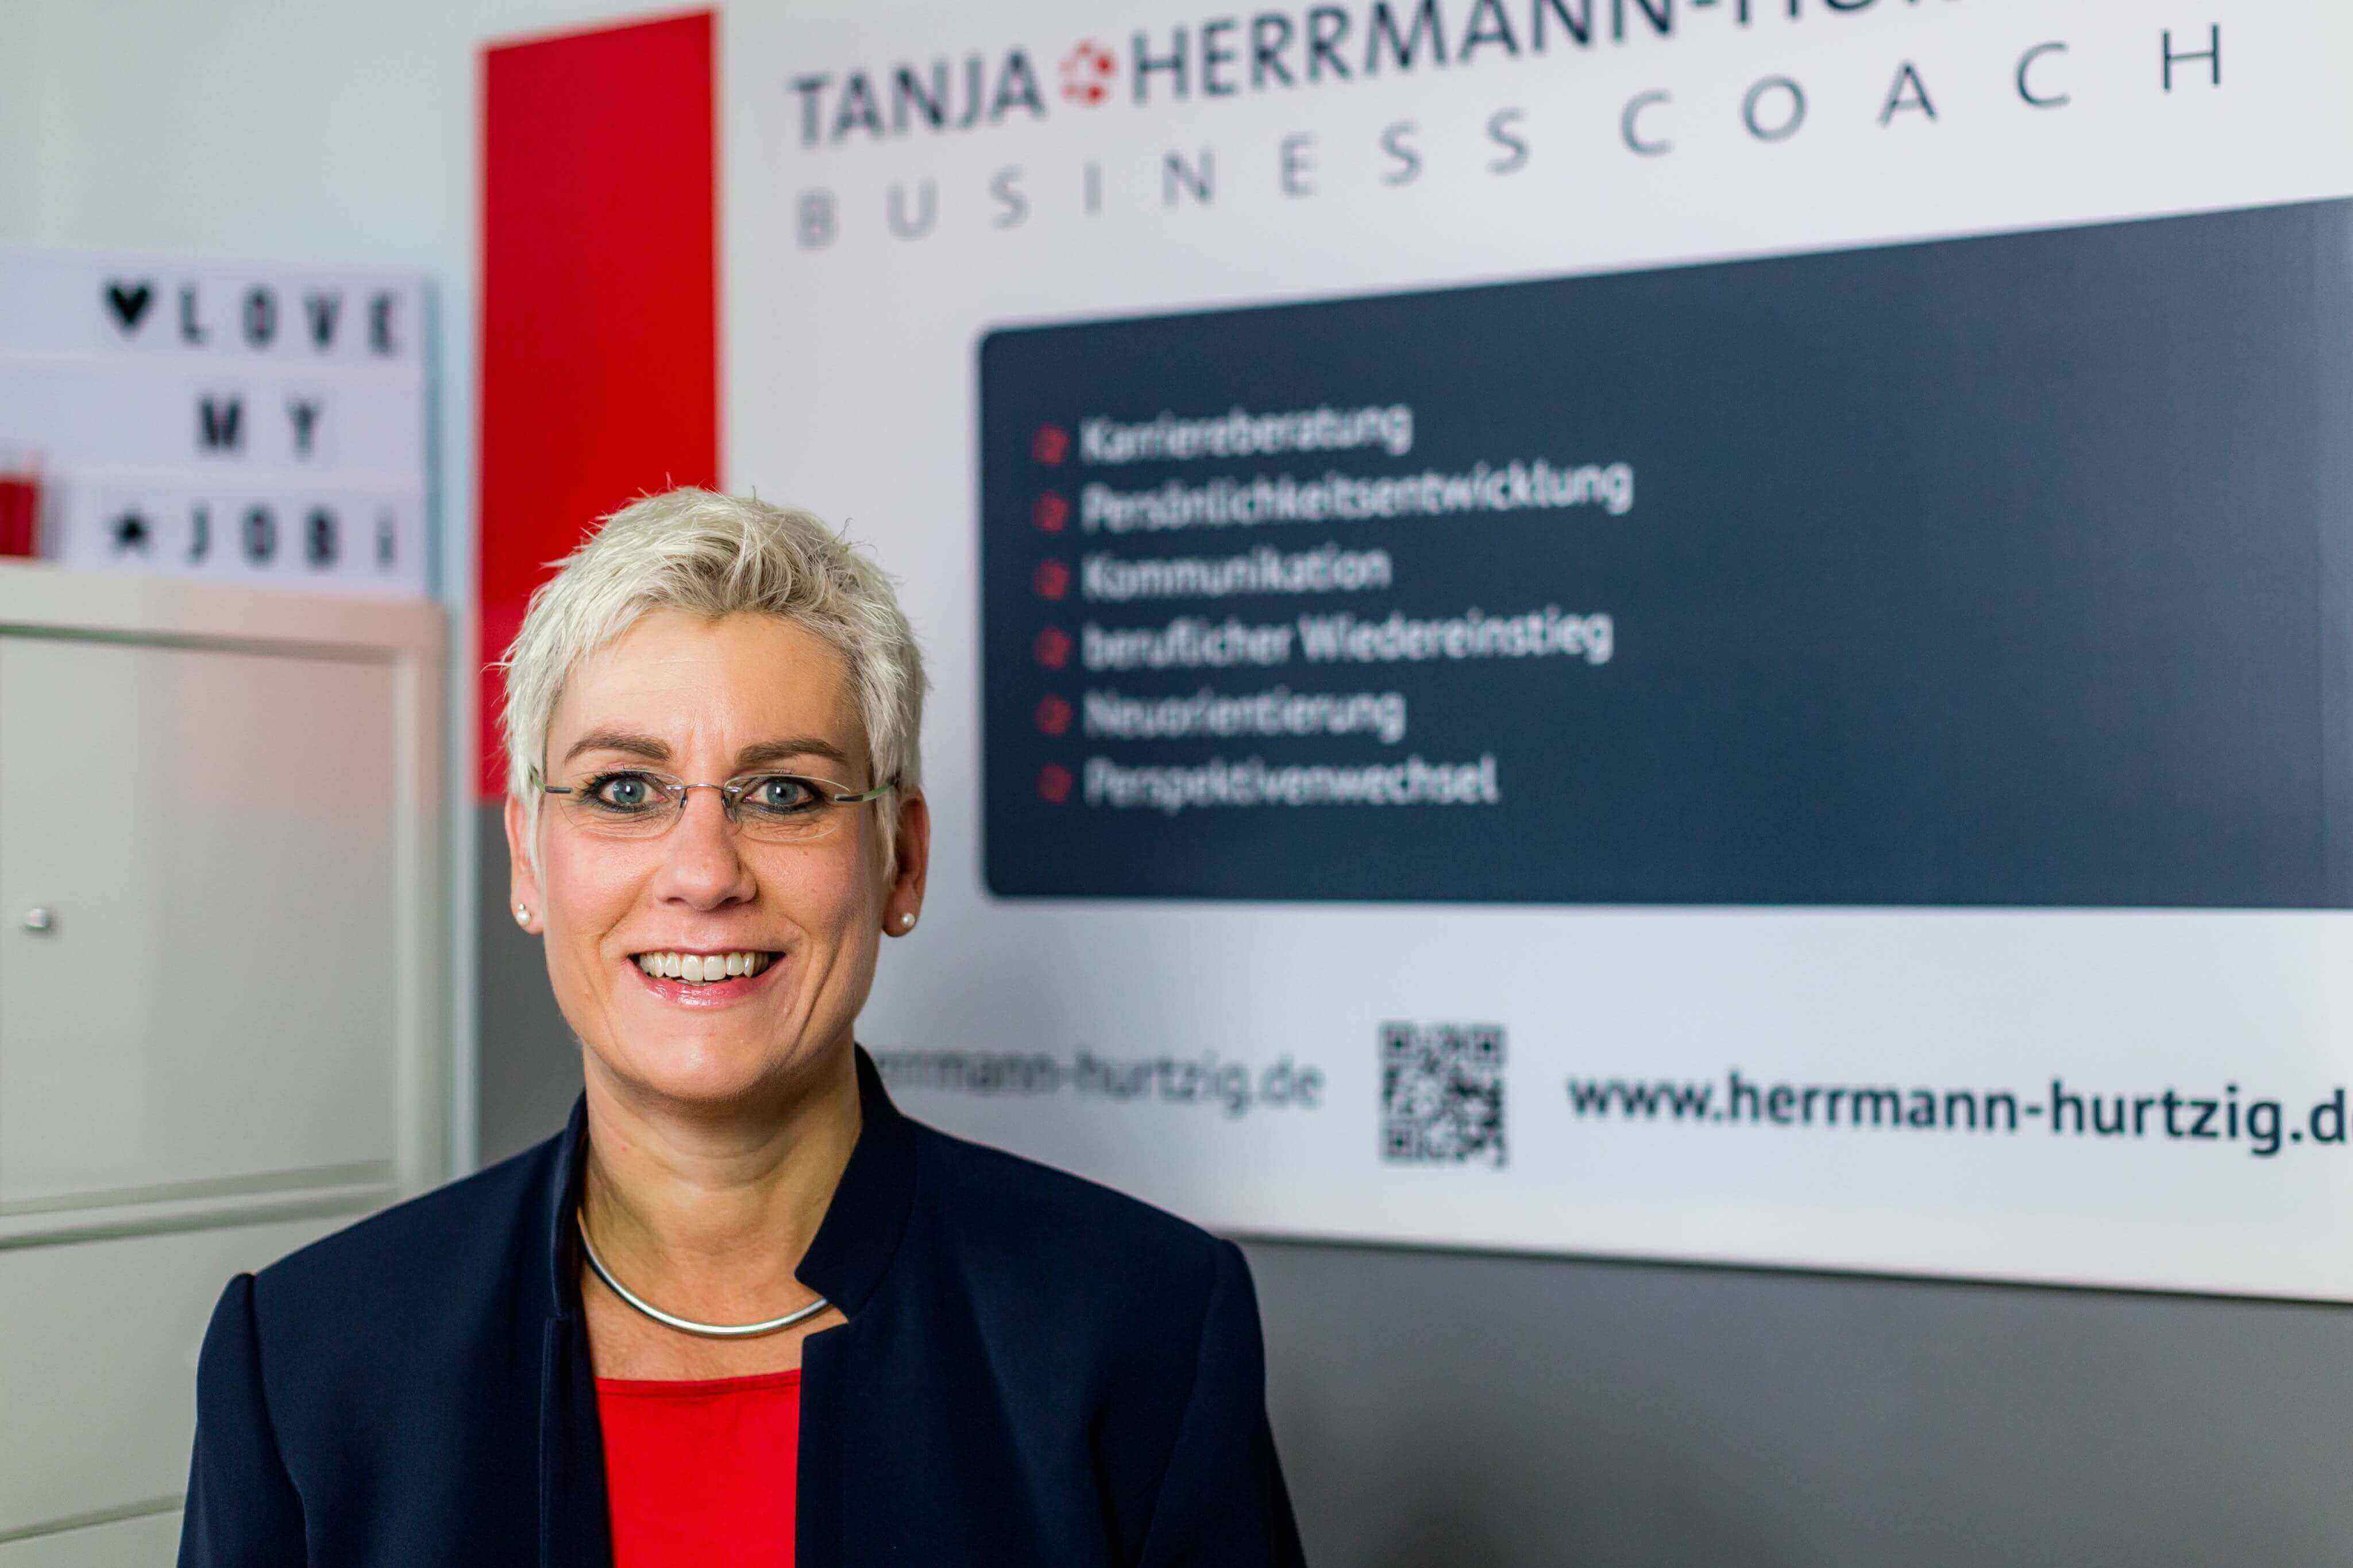 Tanja Herrmann-Hurtzig Business Coach